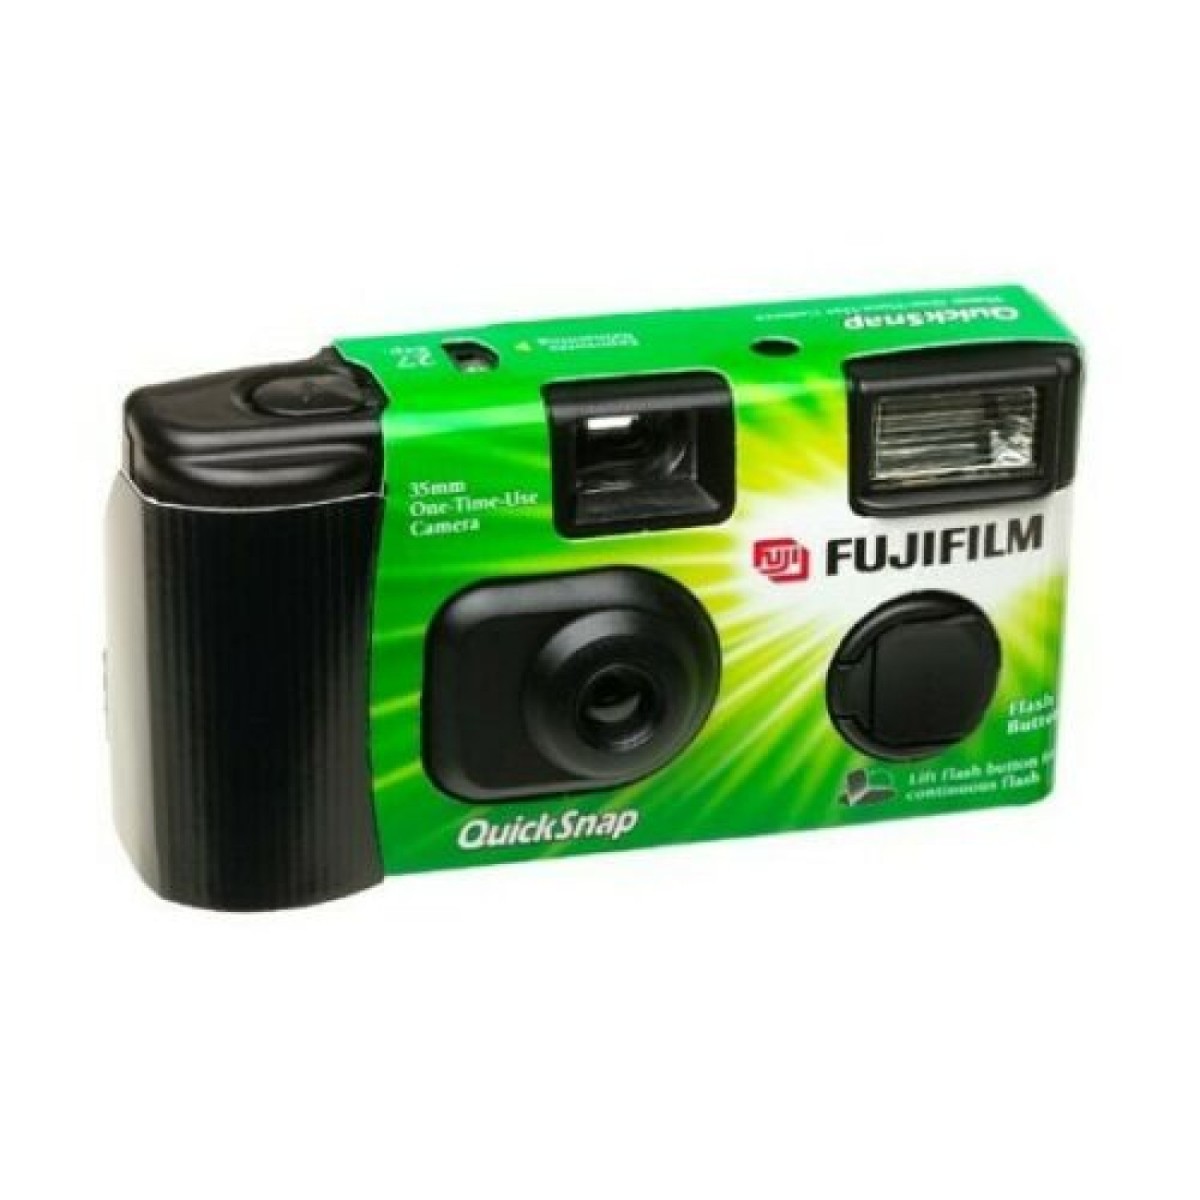 5 Fujifilm Quicksnap Flash 400 Disposable 35mm Single Use Film